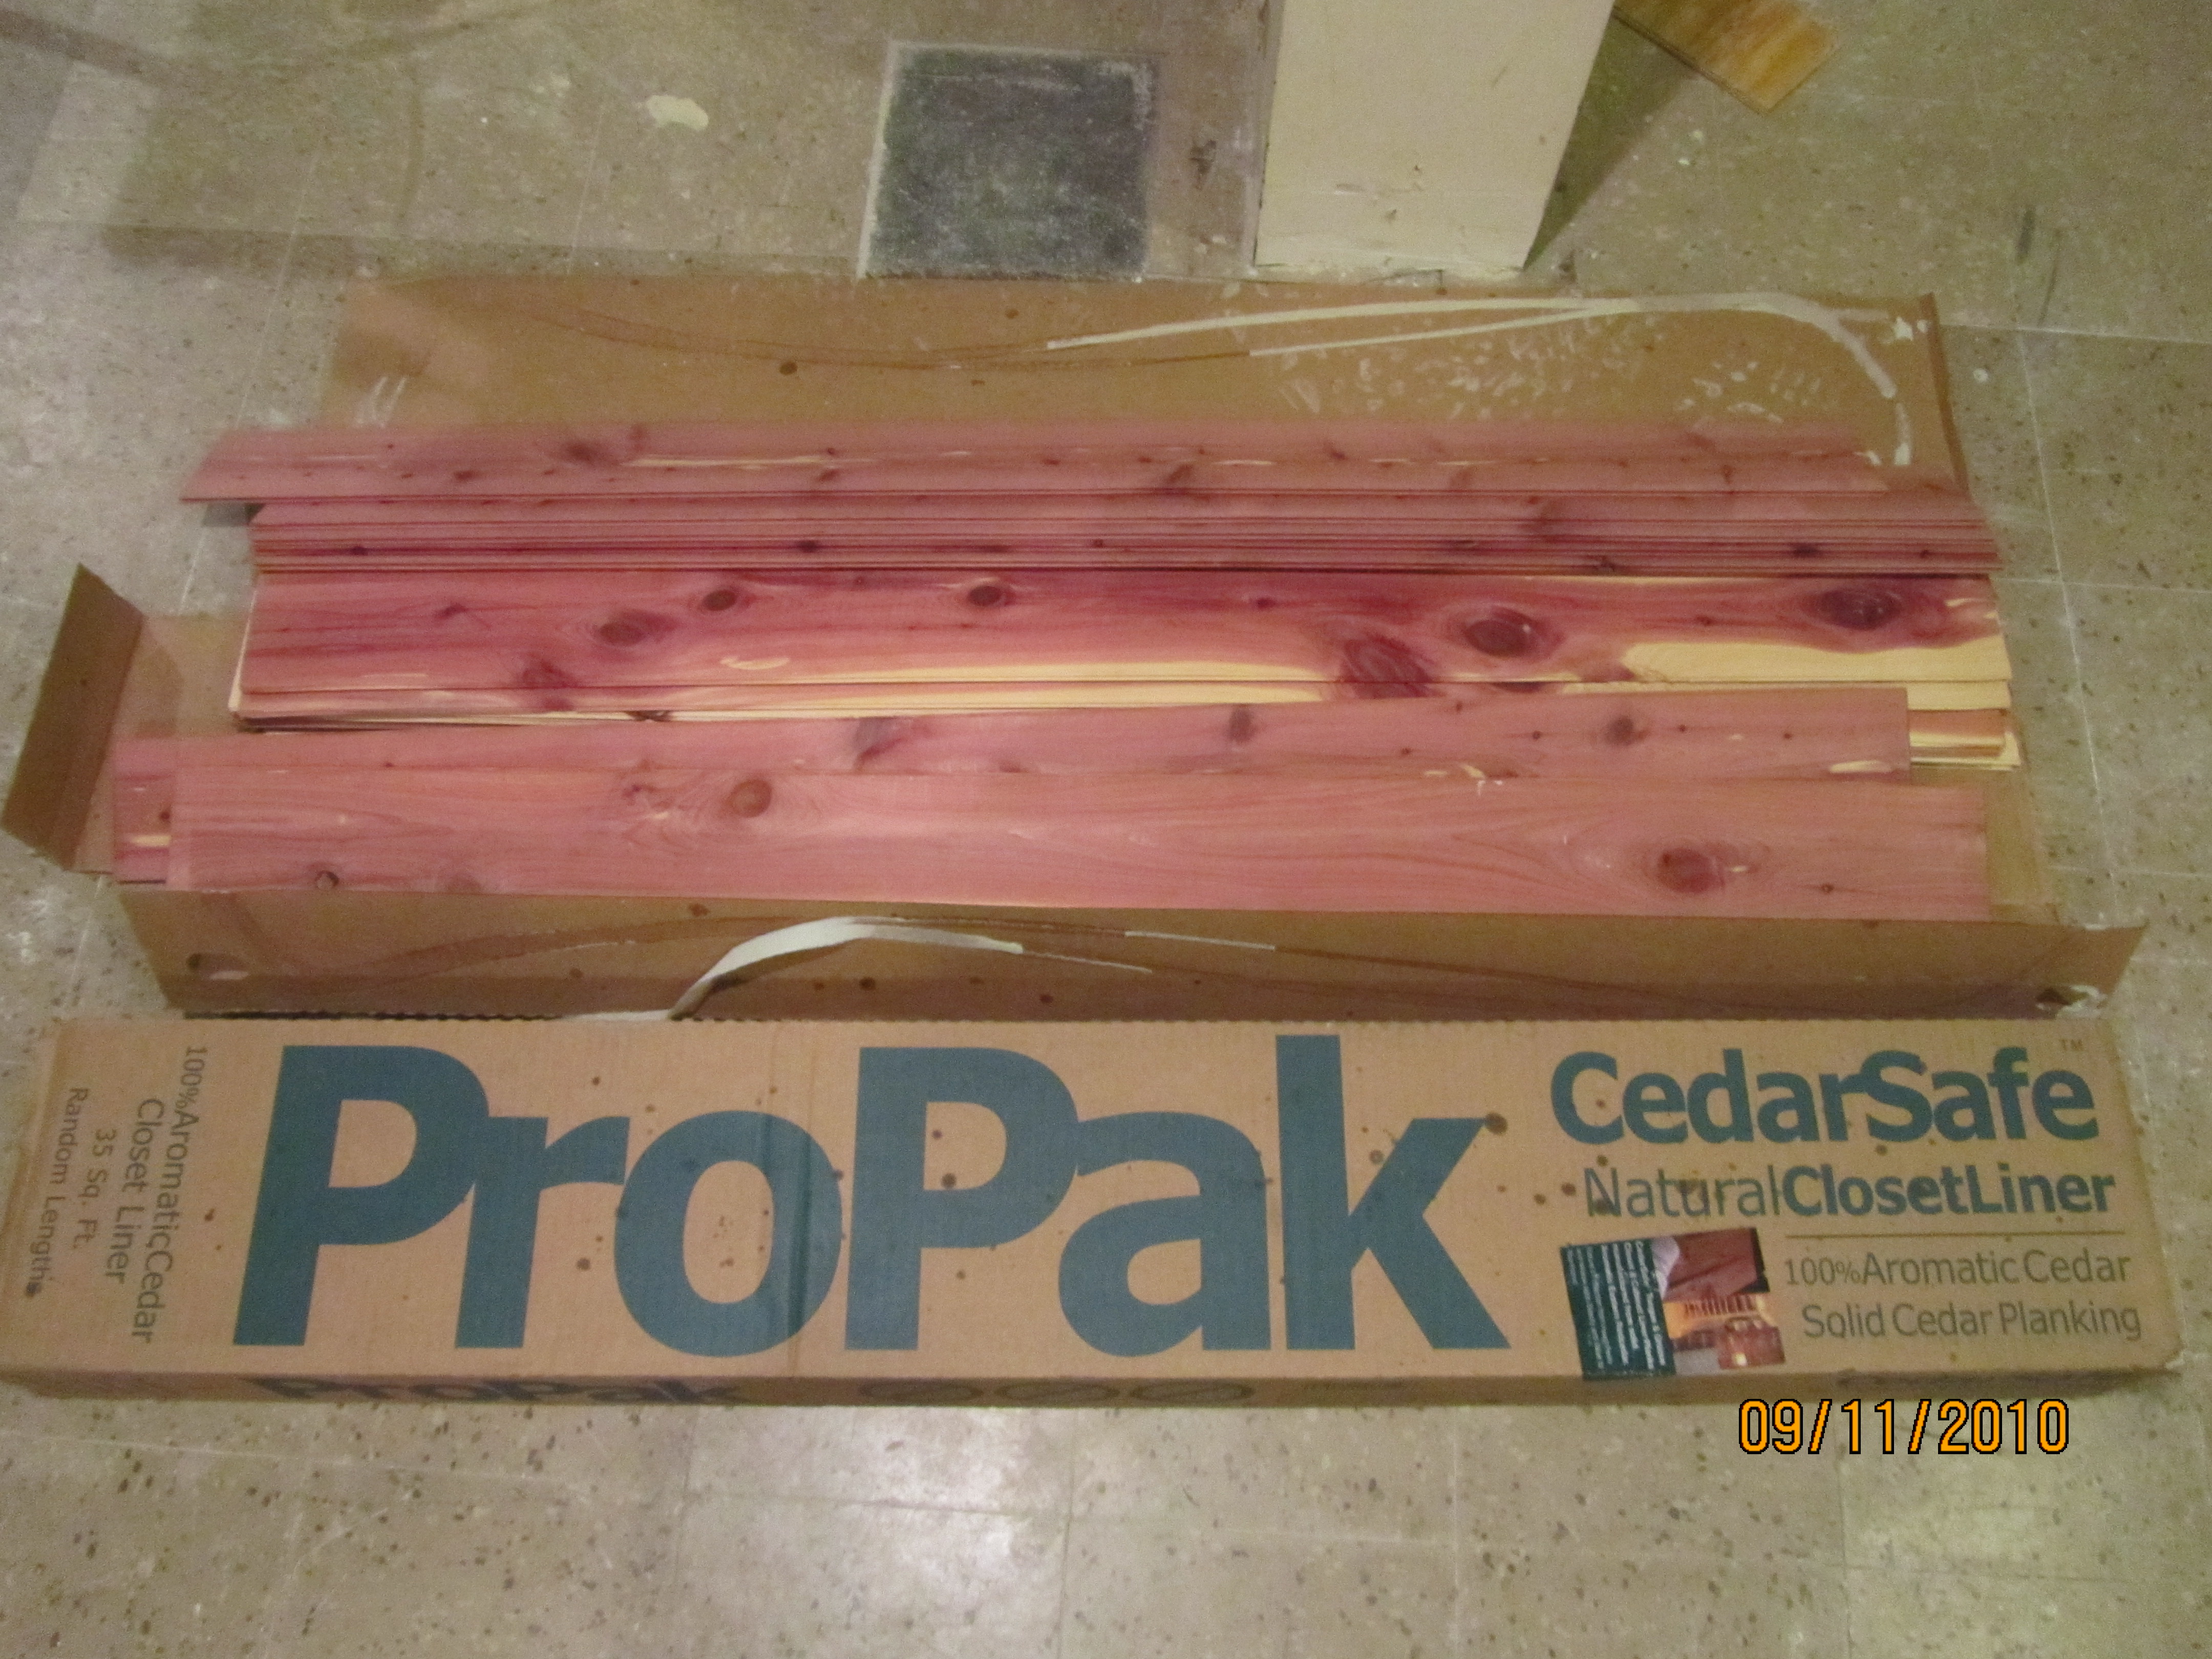 How To Install Aromatic Cedar In A Closet - Concord Carpenter